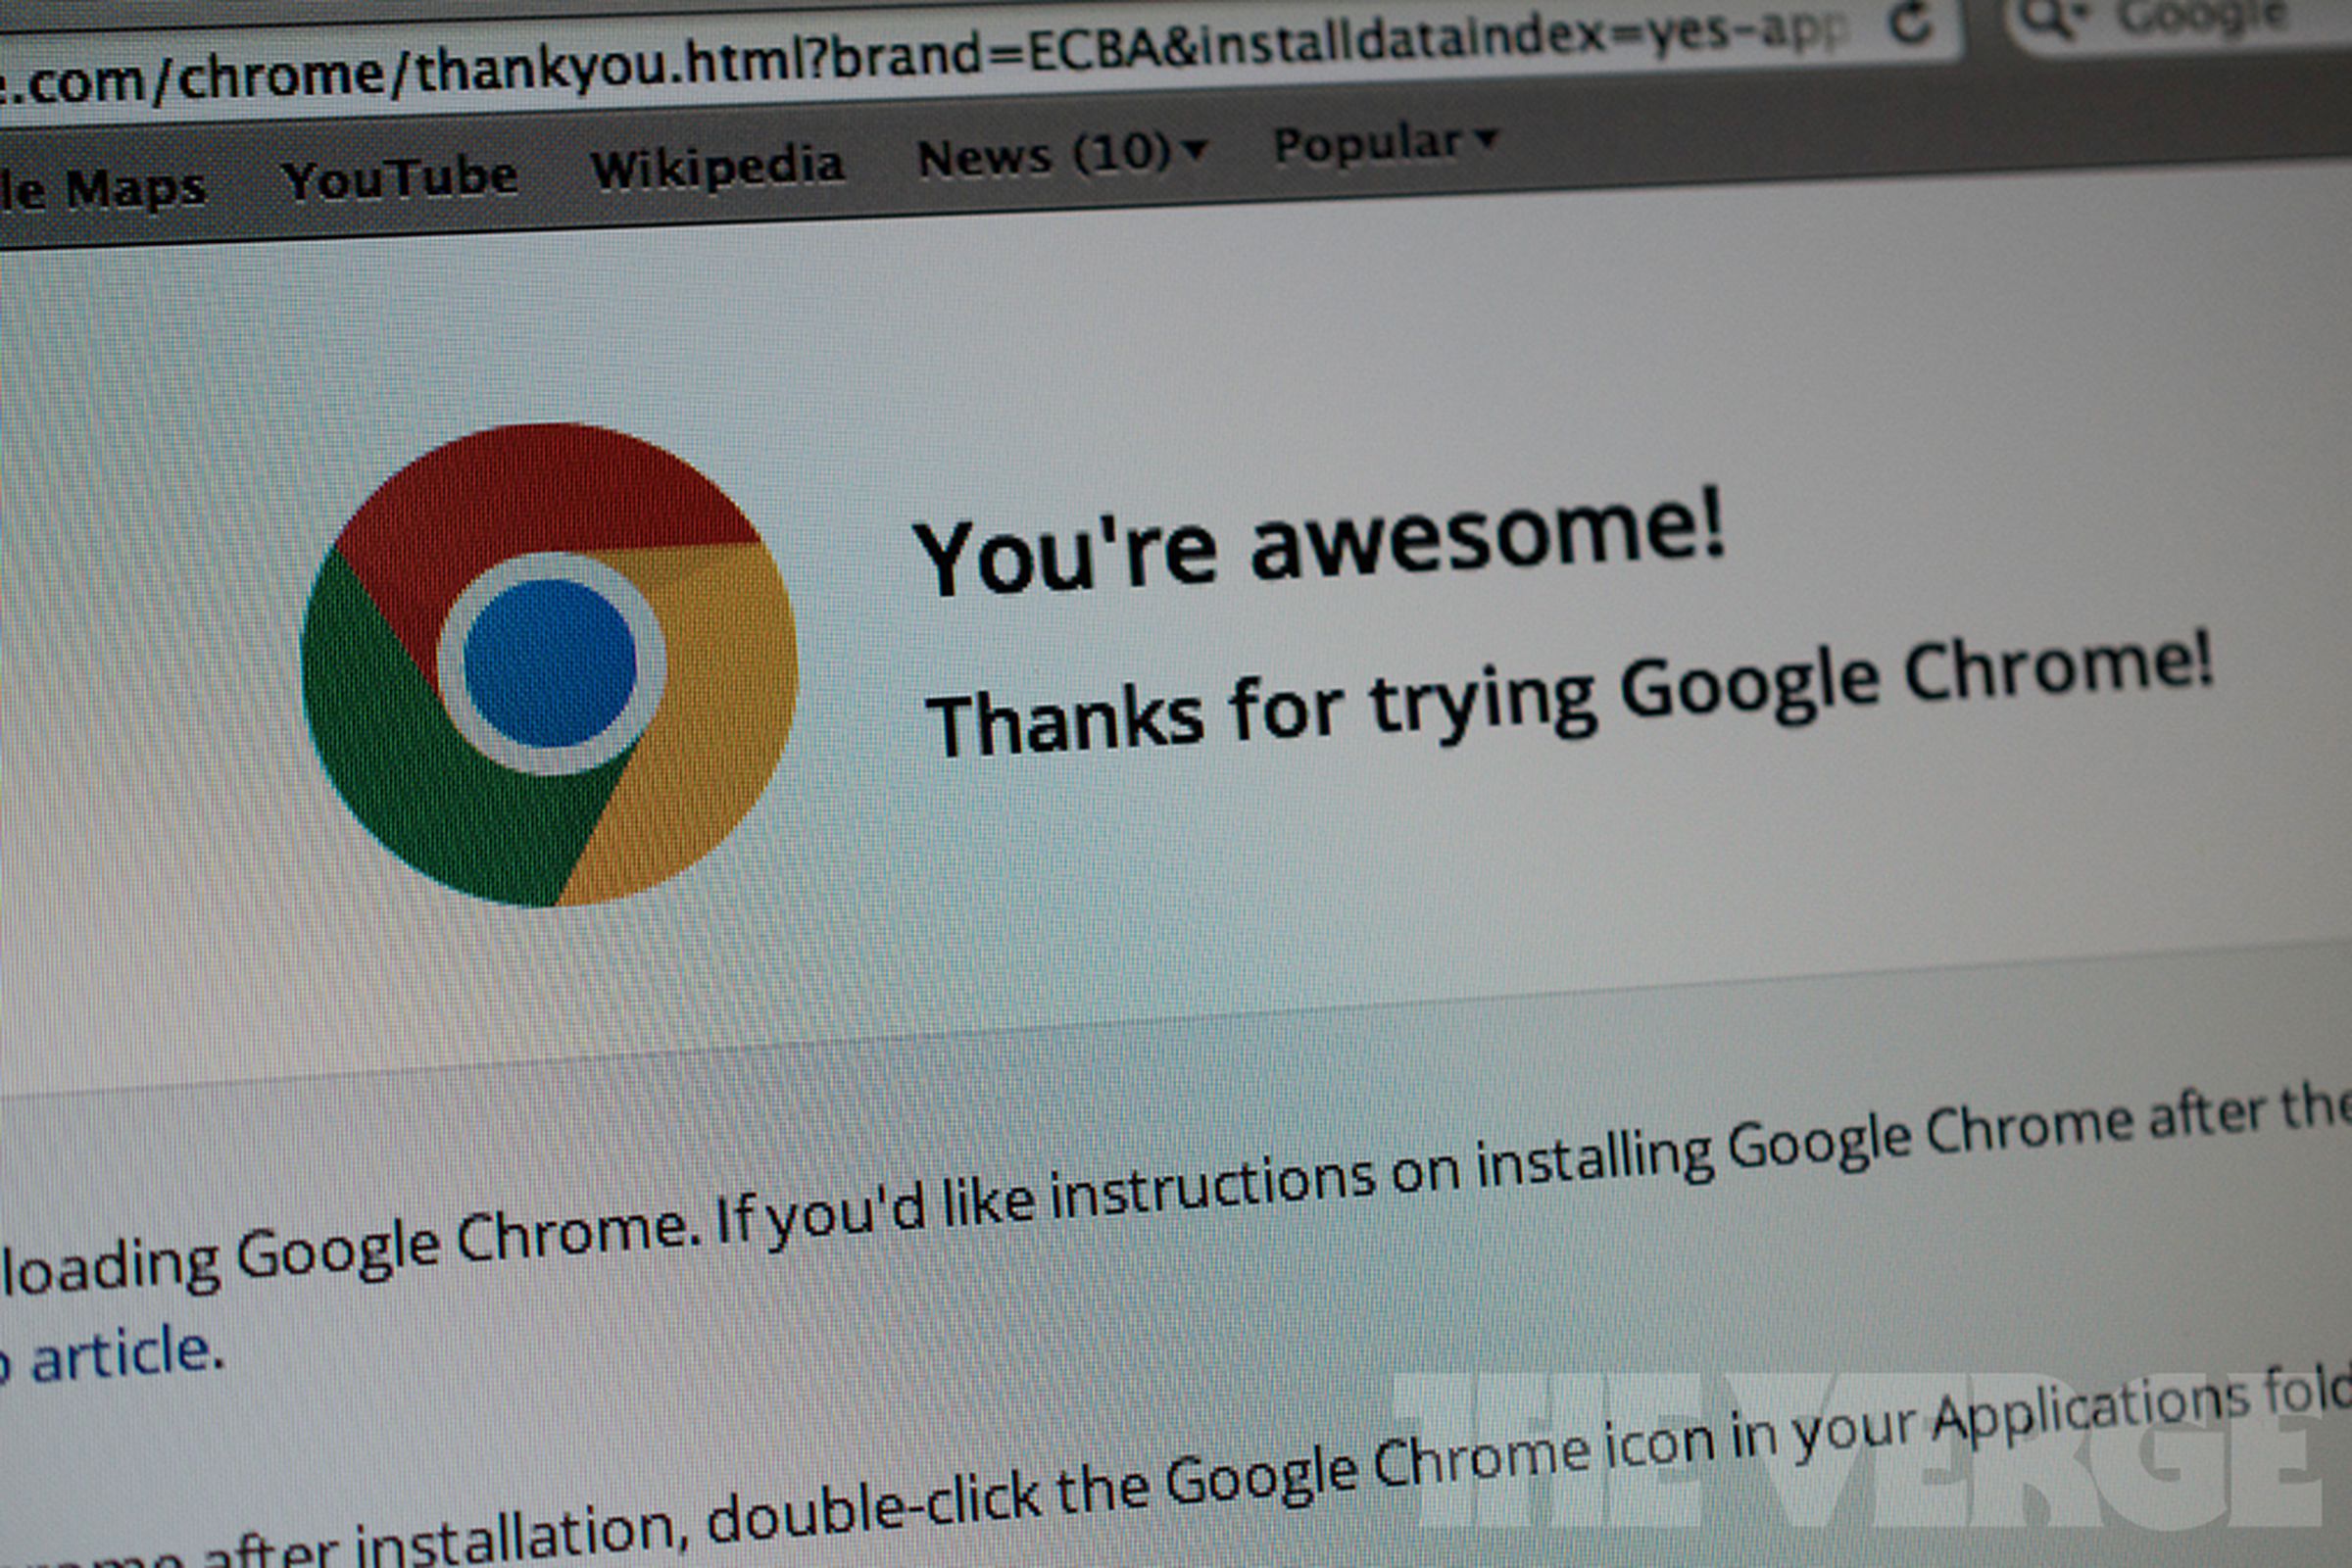 Thanks for trying Google Chrome! (1020)